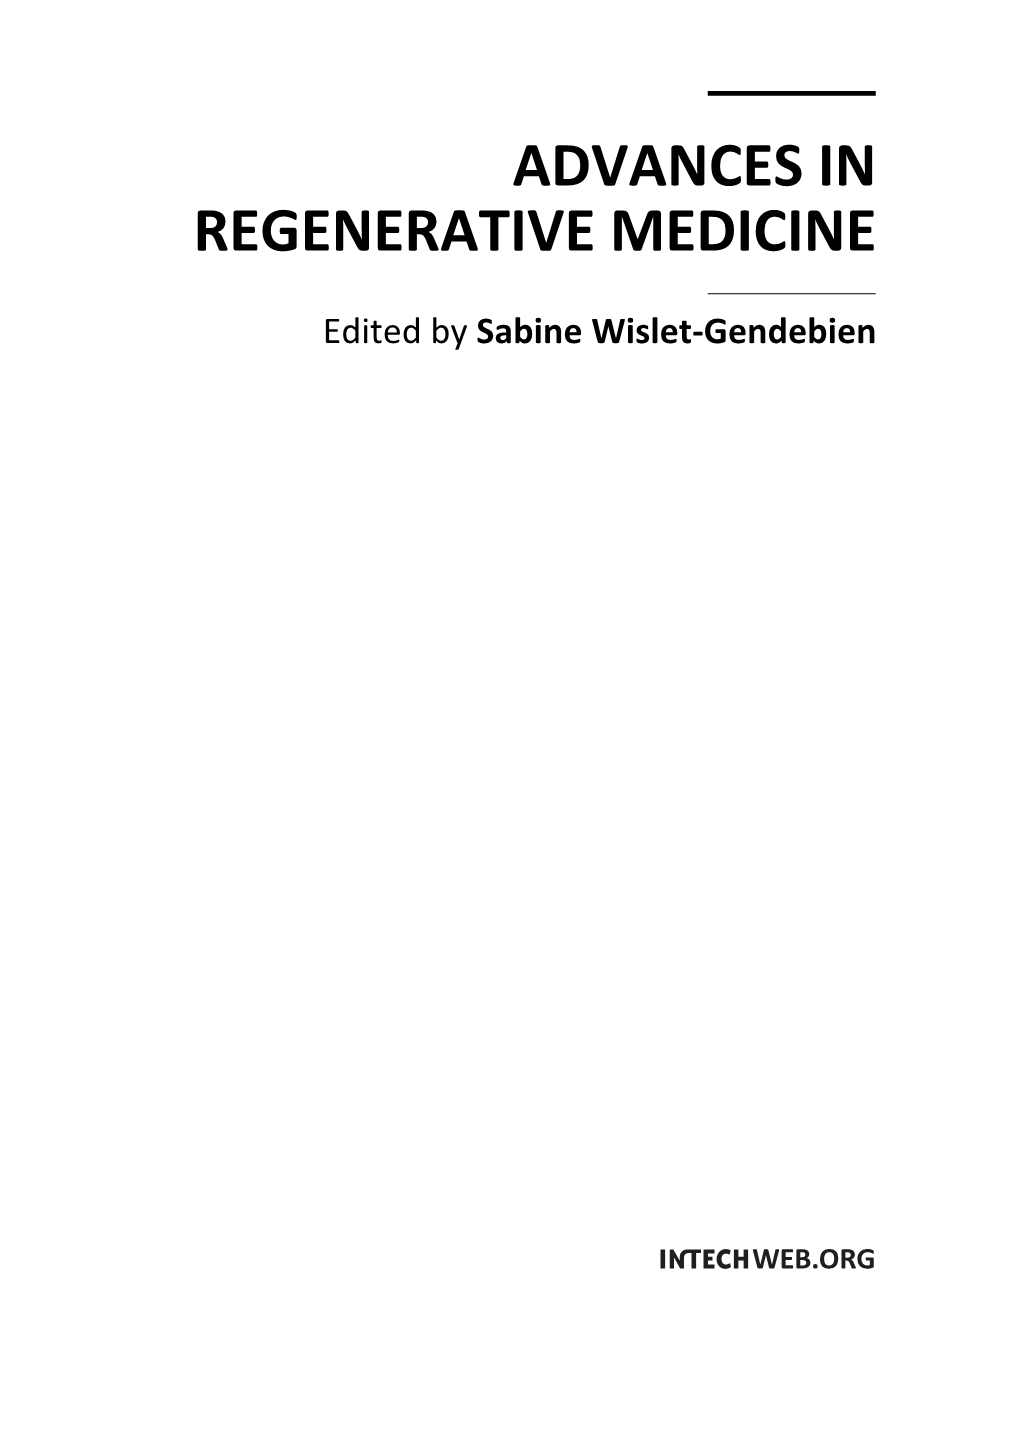 Advances in Regenerative Medicine